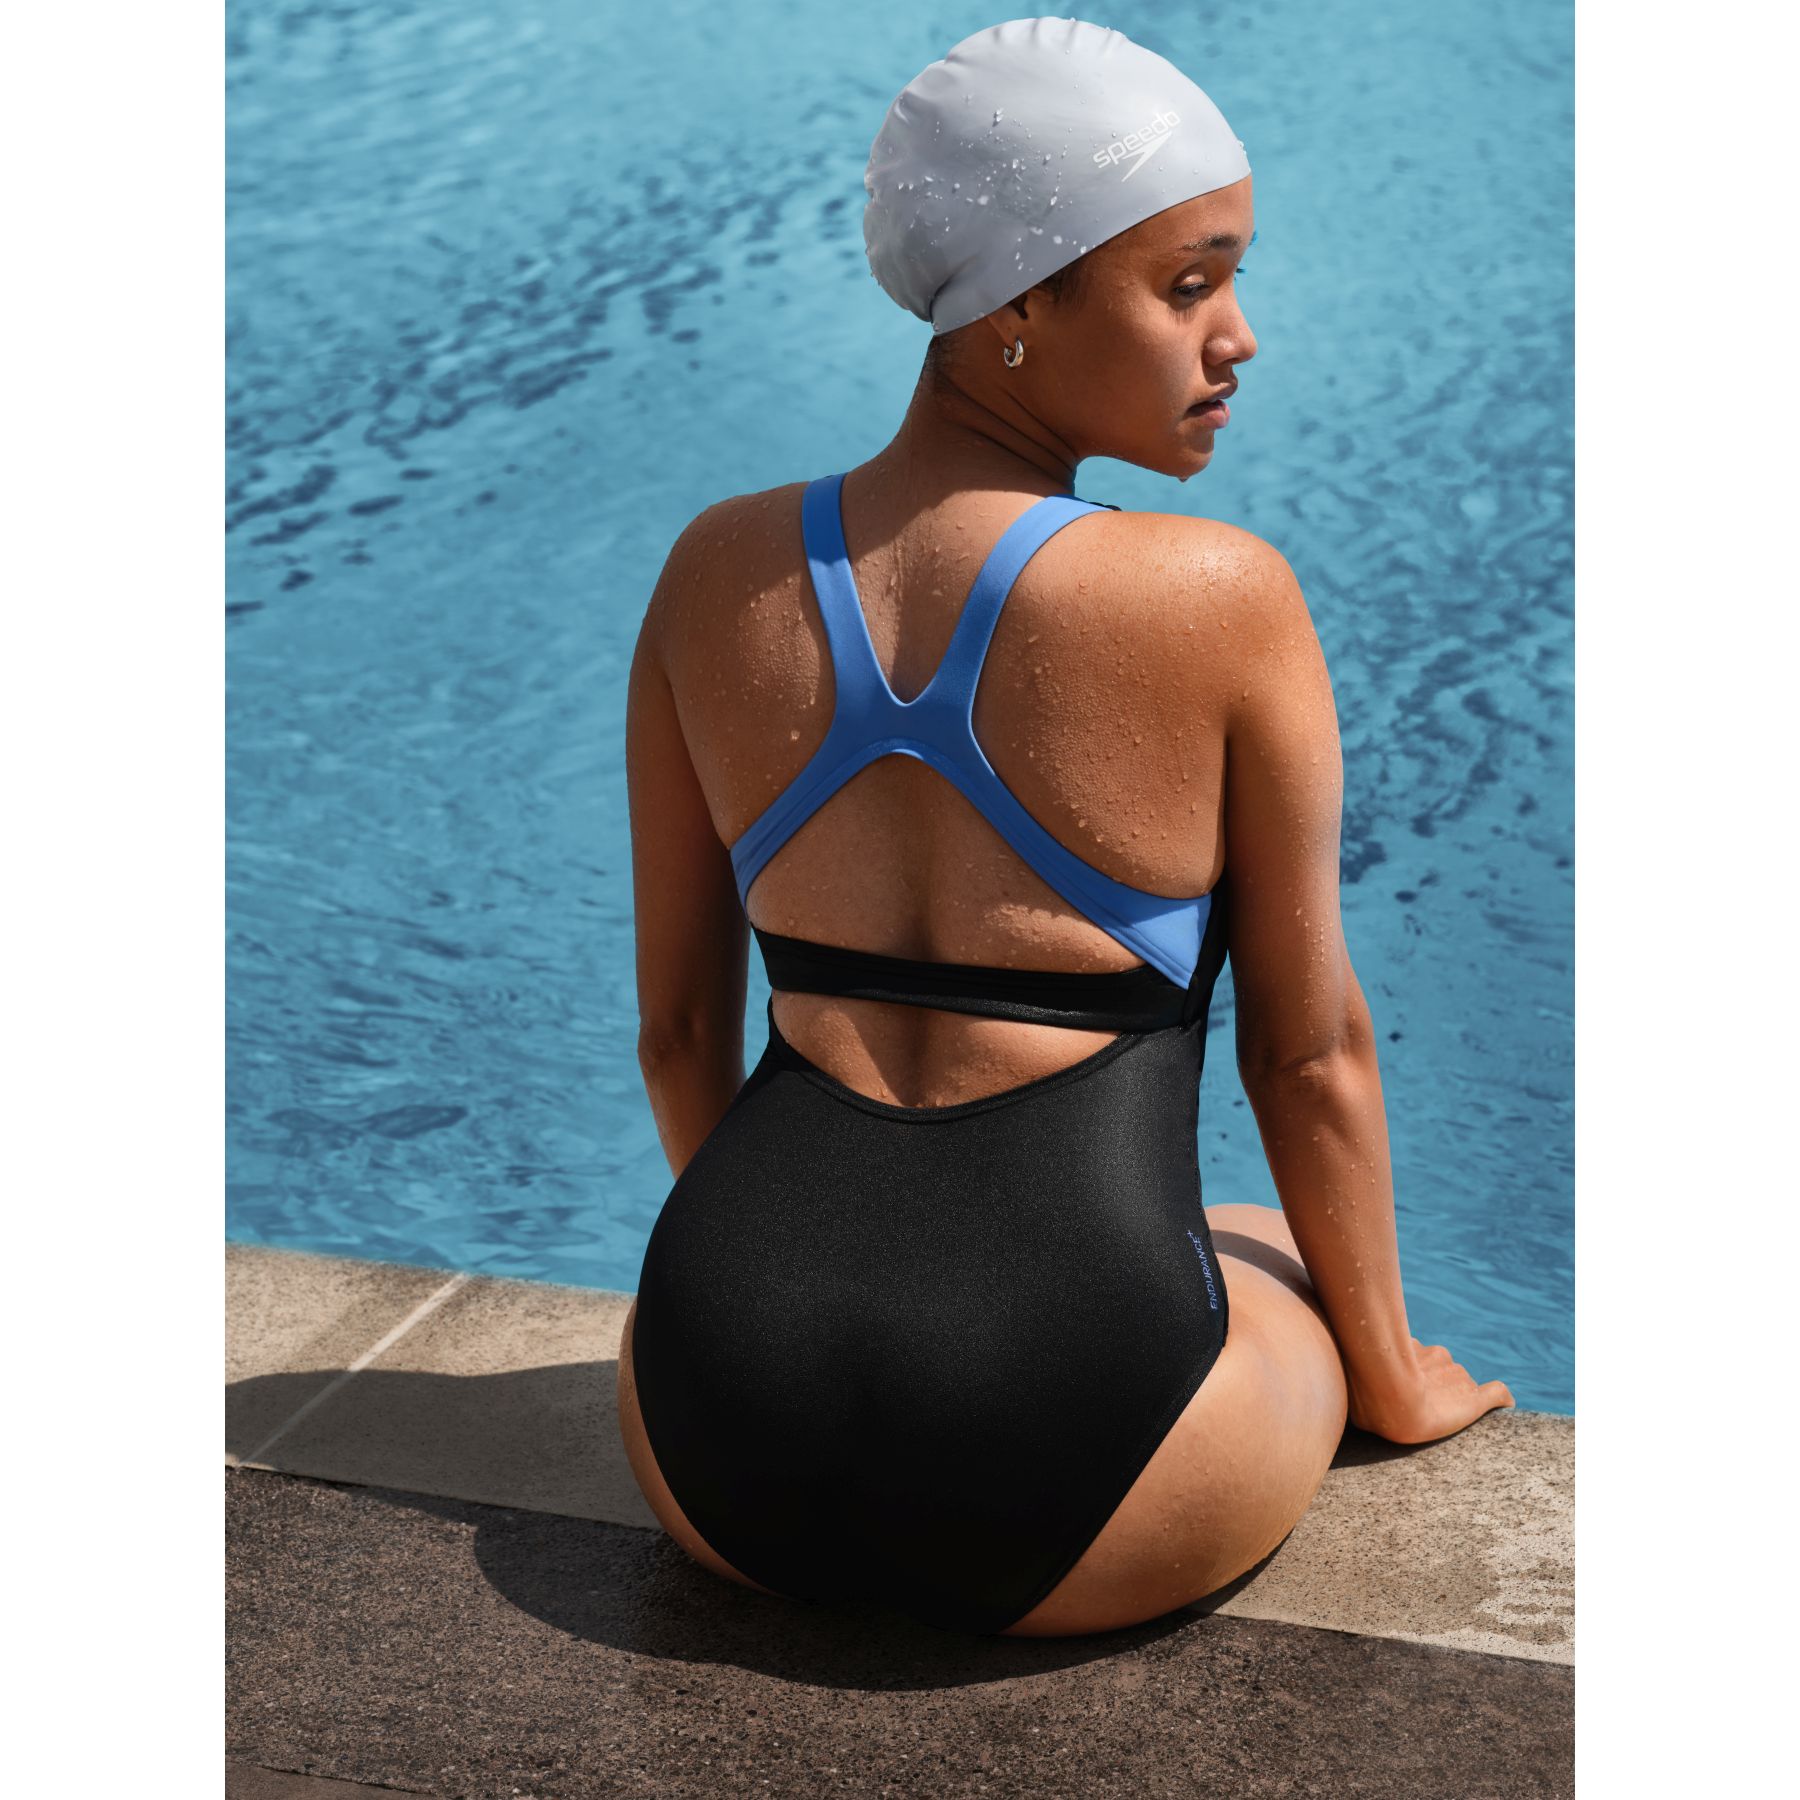 https://images.bike24.com/i/mb/df/f2/46/speedo-flex-band-swimsuit-with-integrated-swim-bra-women-black-curious-blue-2-1632692.jpg